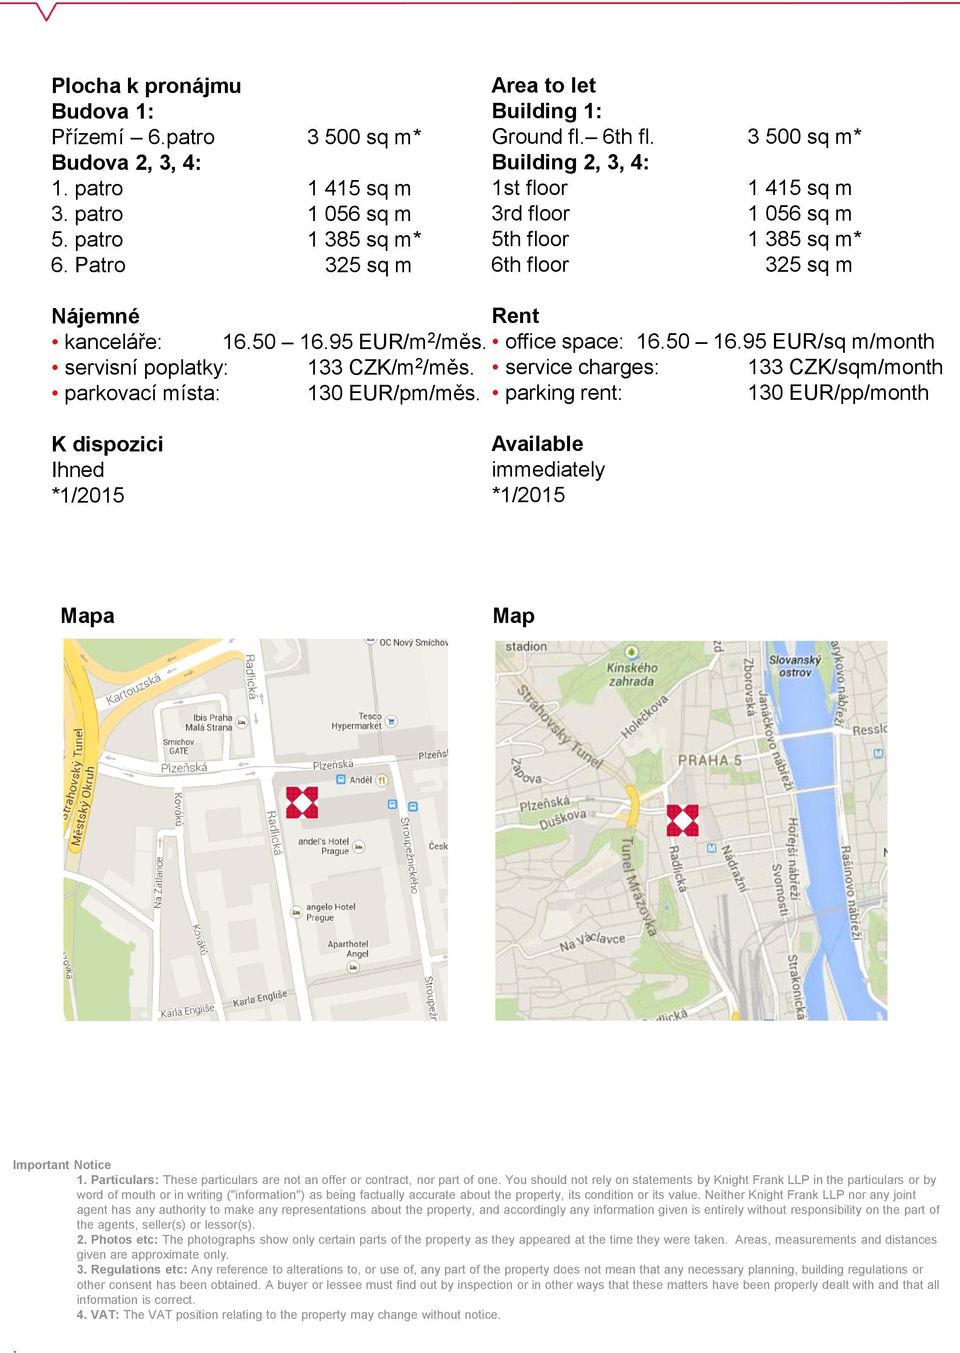 service charges: 133 CZK/sqm/month parkovací místa: 130 EUR/pm/měs. parking rent: 130 EUR/pp/month K dispozici Ihned Available immediately Mapa Map Important Notice 1.